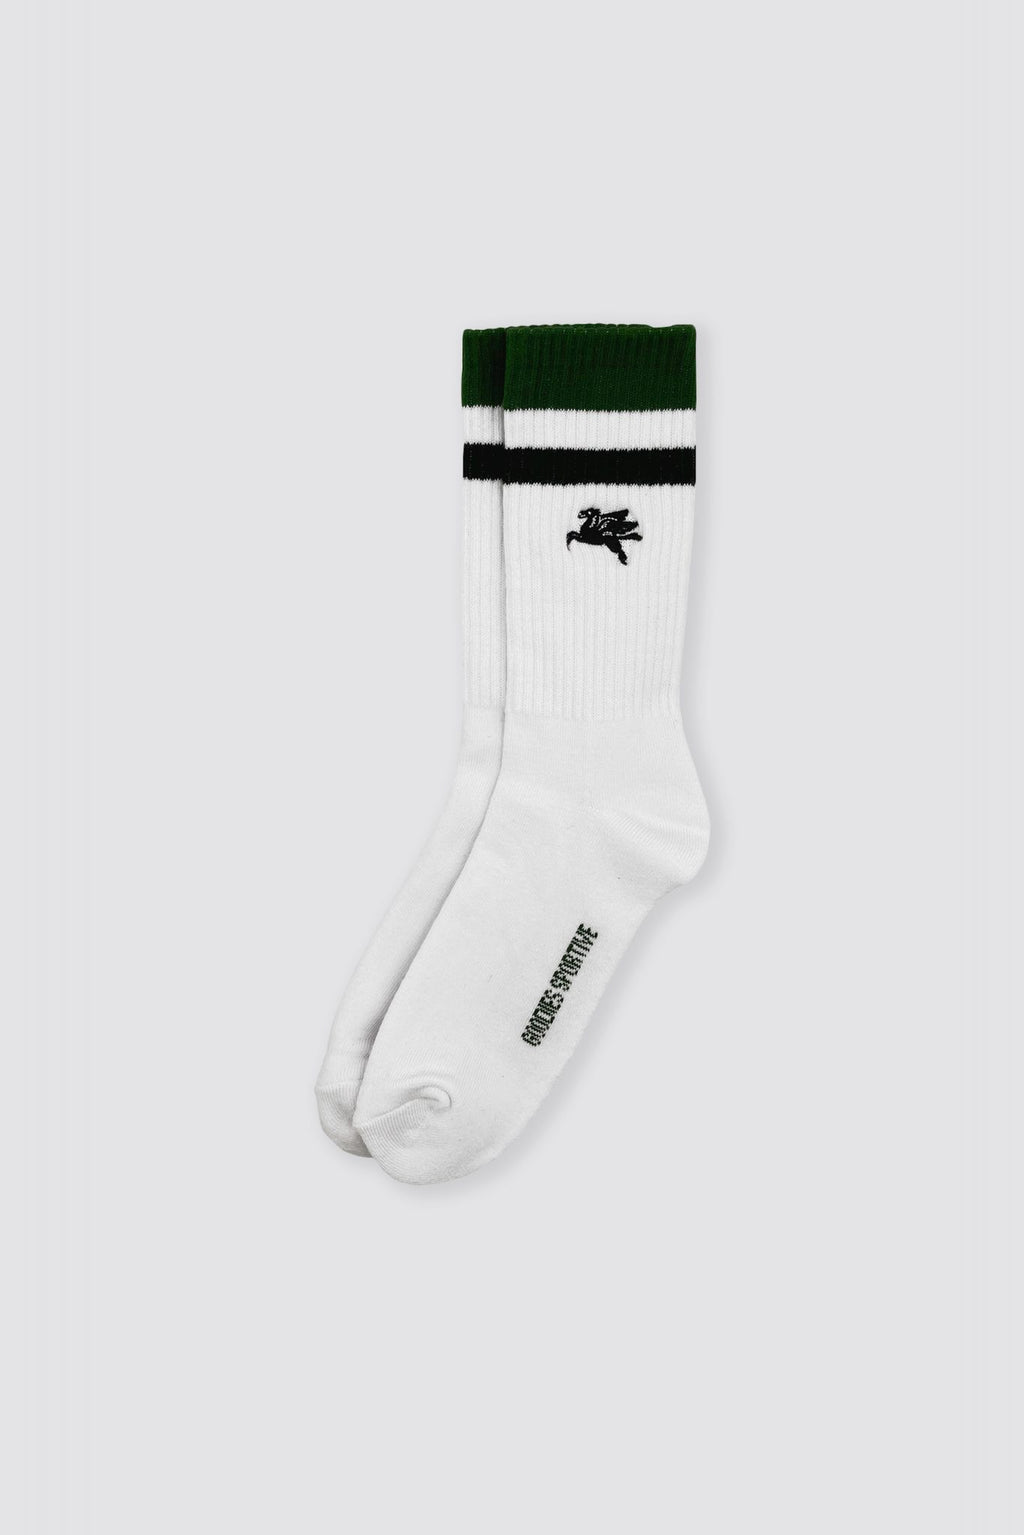 Goodies Sportive - Pegasus Sock White - Once Size